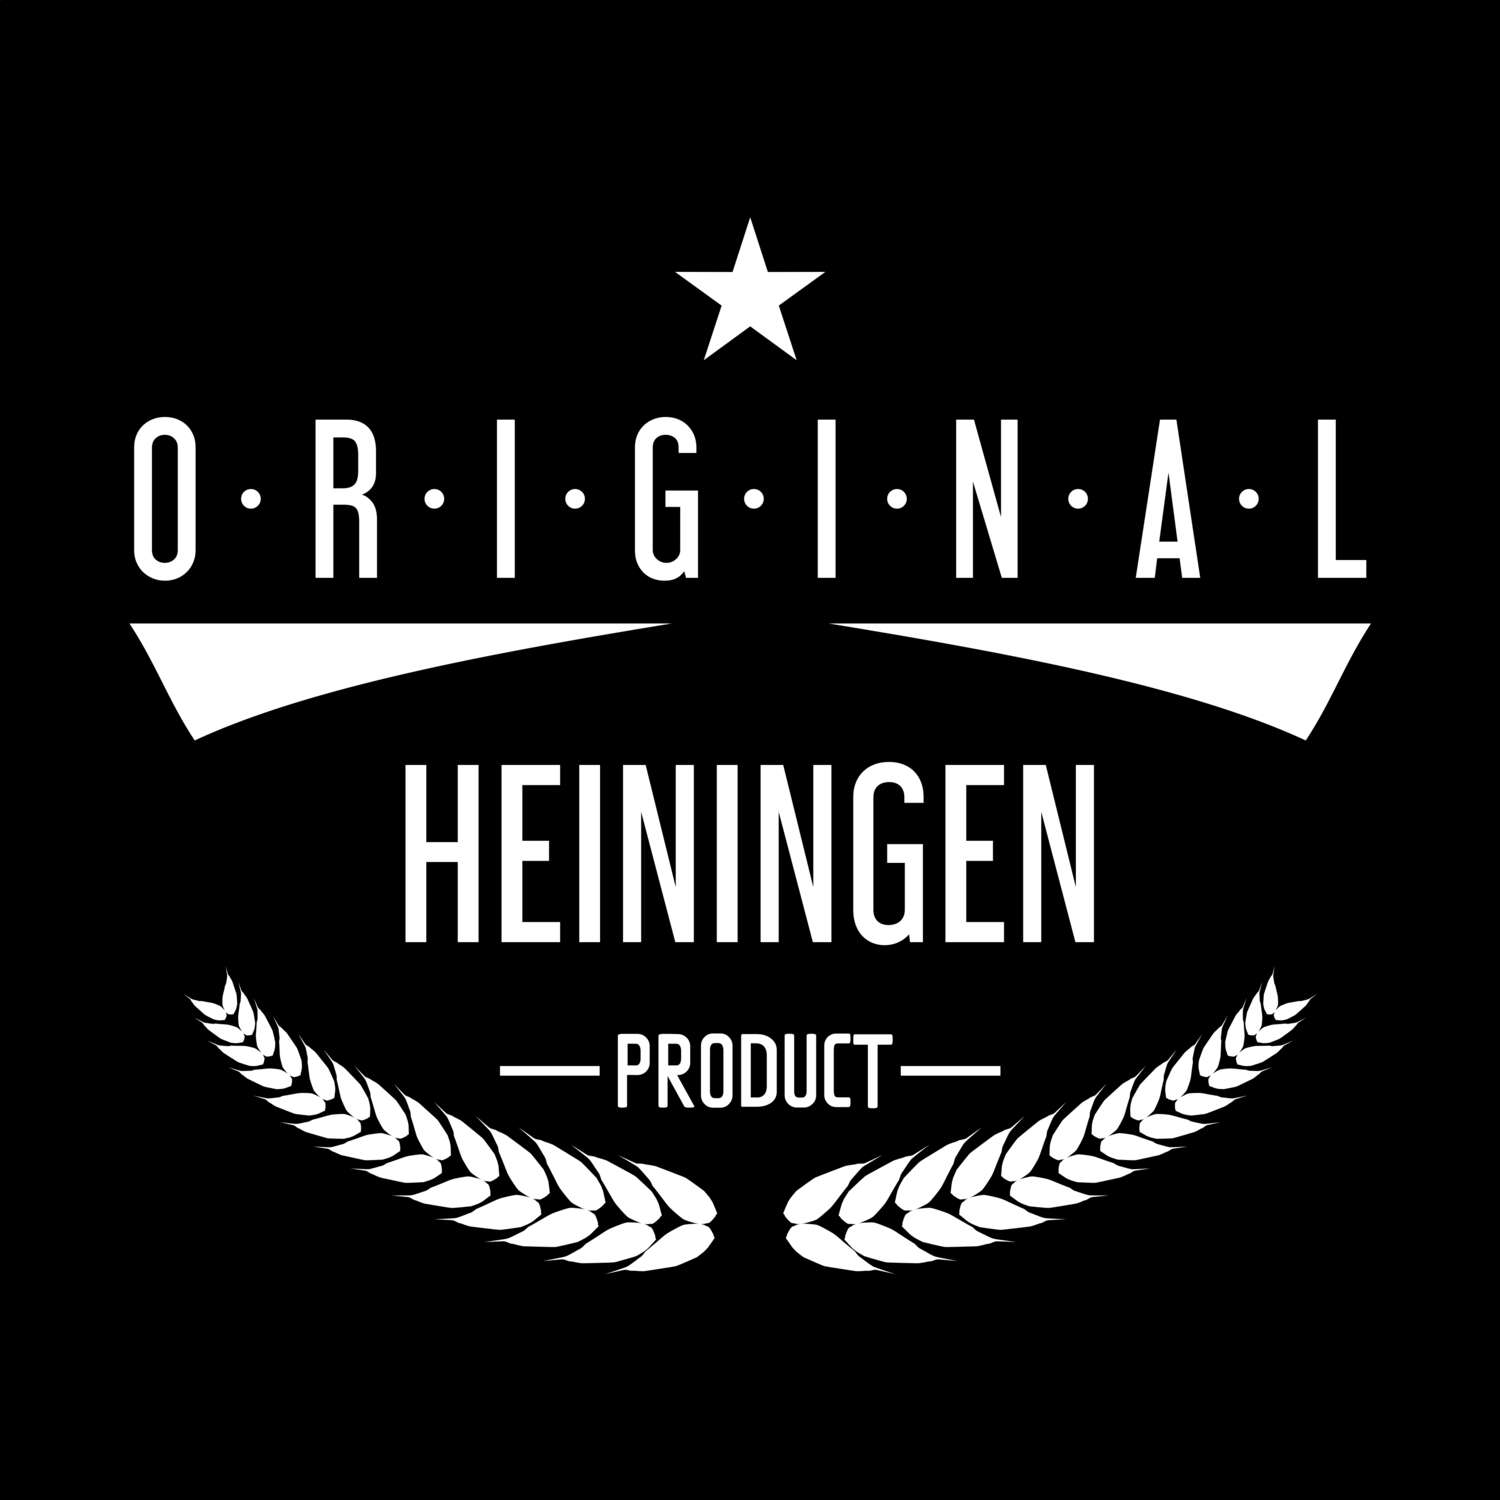 Heiningen T-Shirt »Original Product«